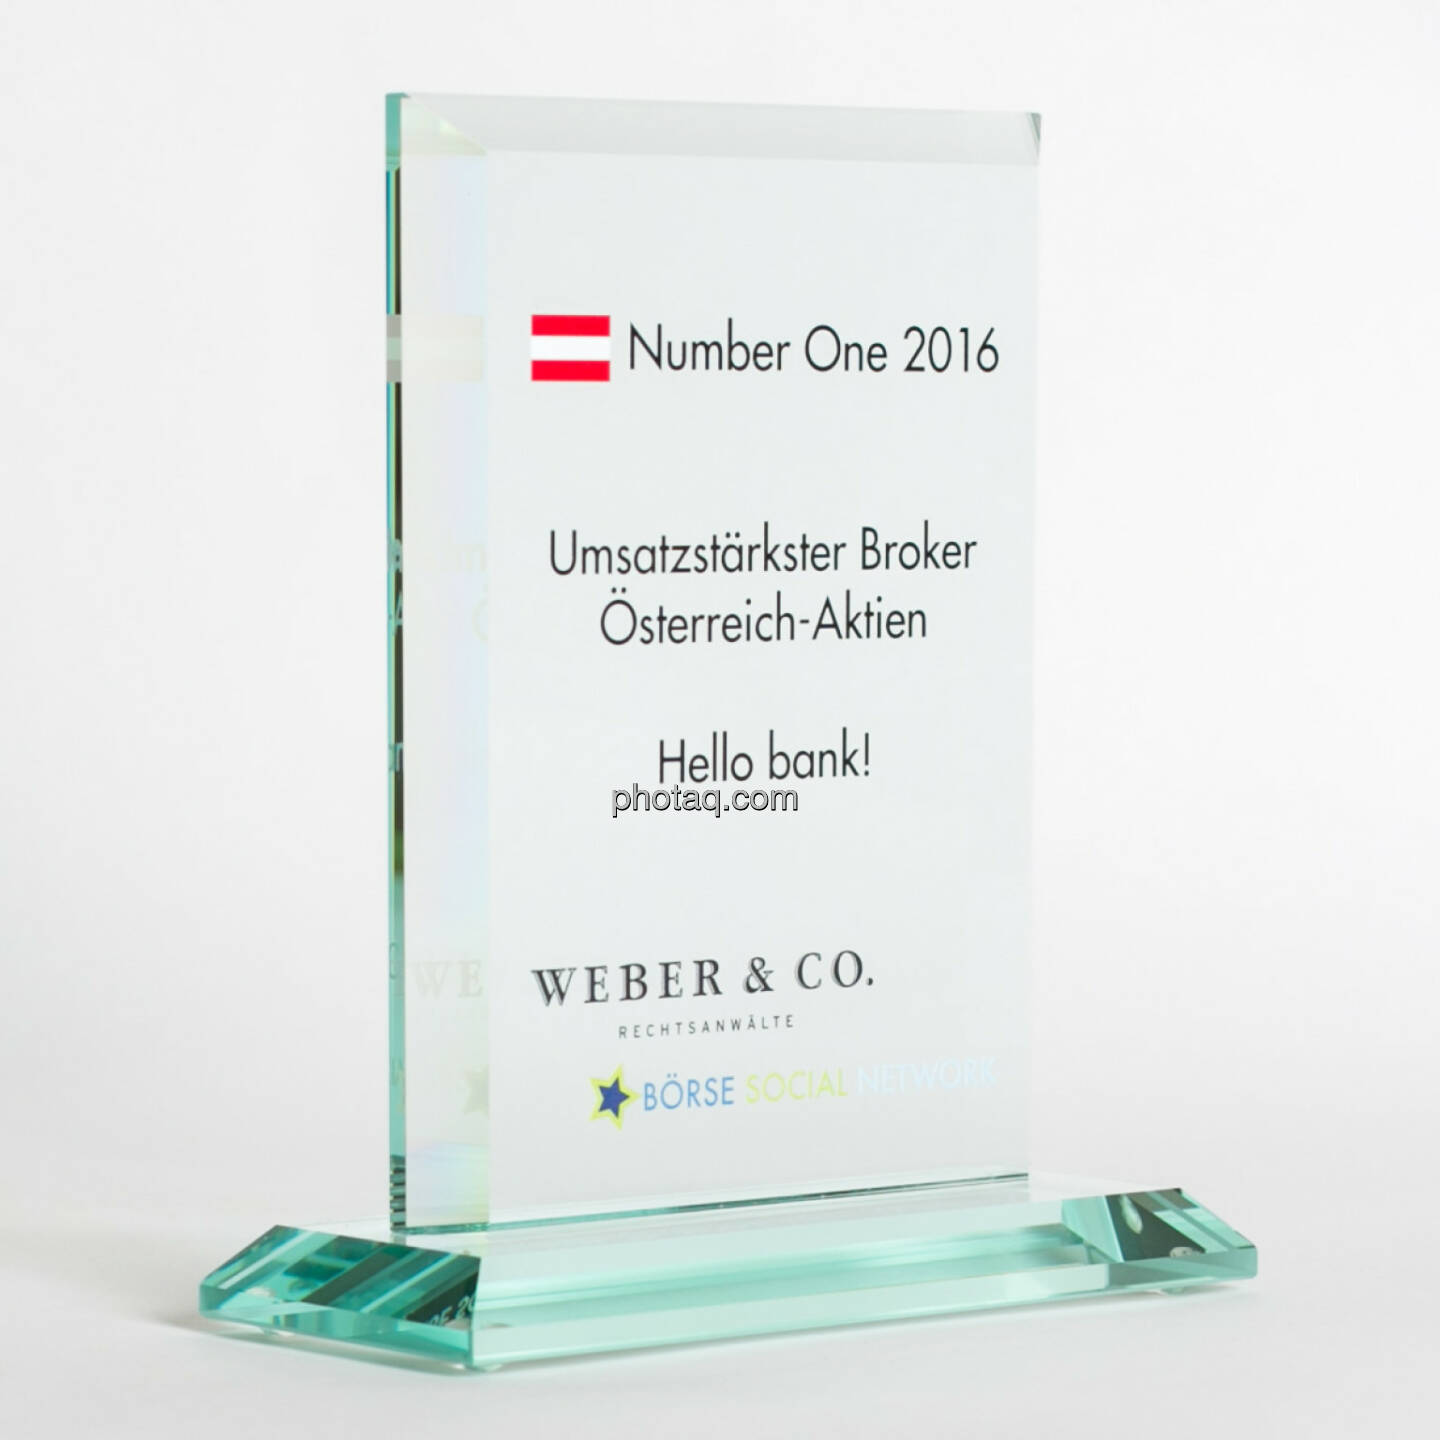 Number One Awards 2016 - Umsatzstärkster Broker Österreich-Aktien Hello bank!